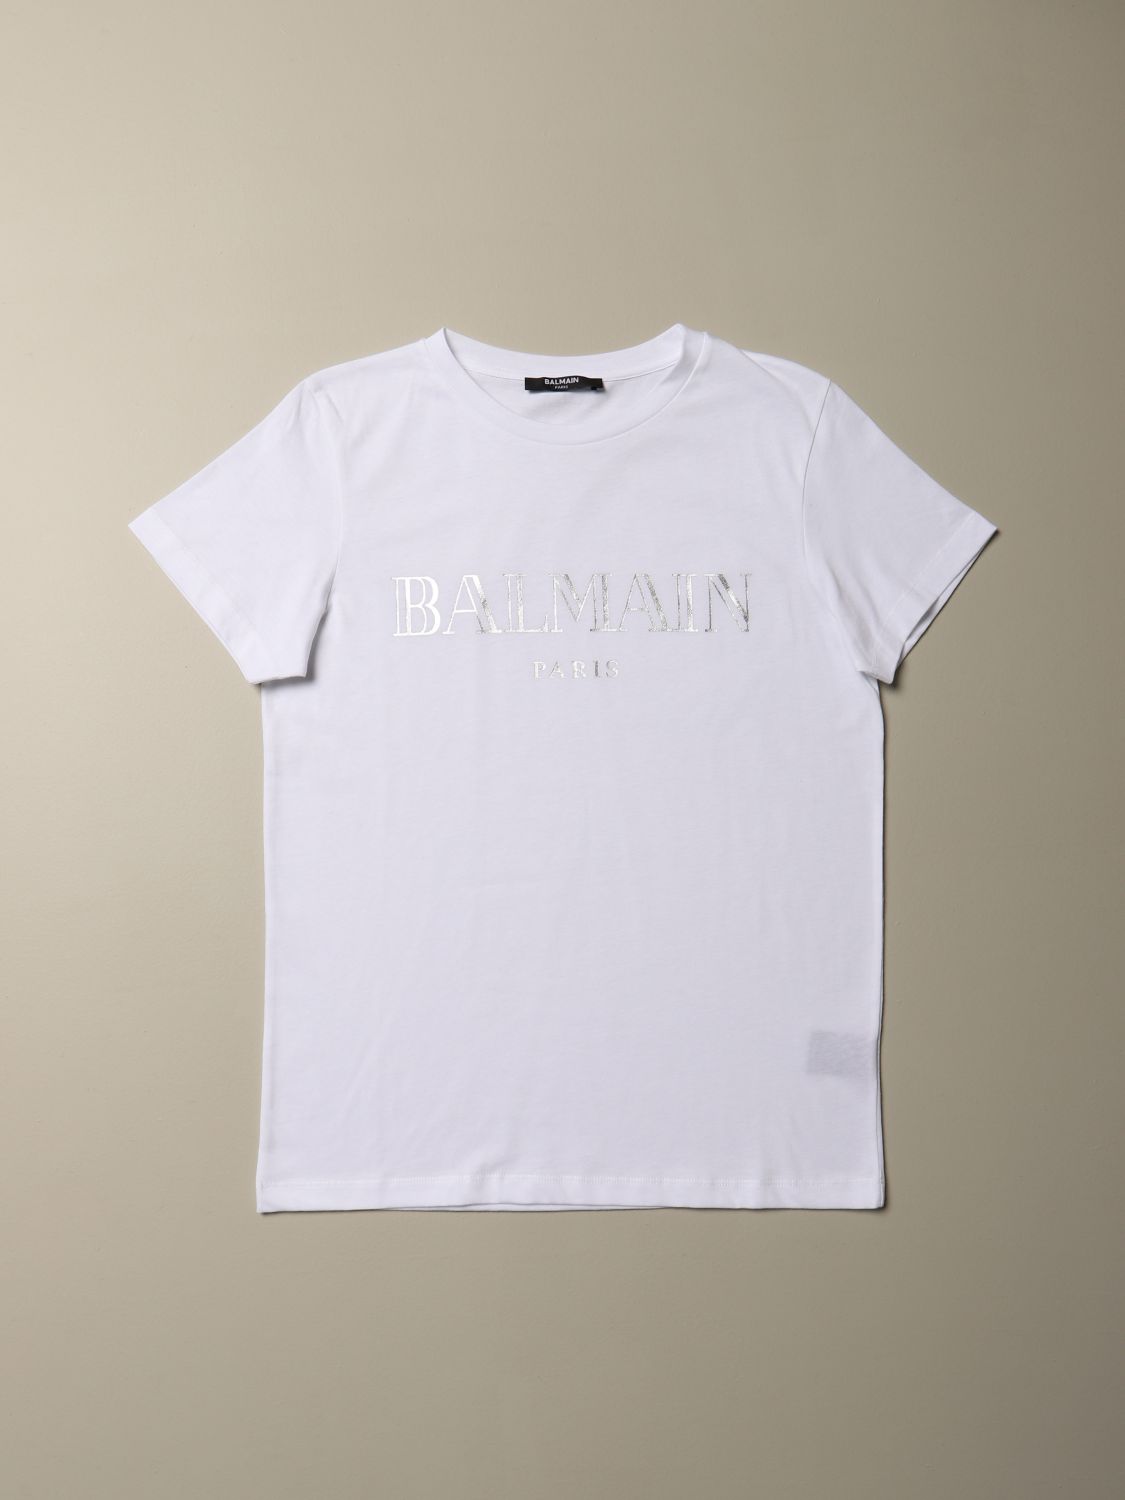 Balmain cotton T-shirt with logo